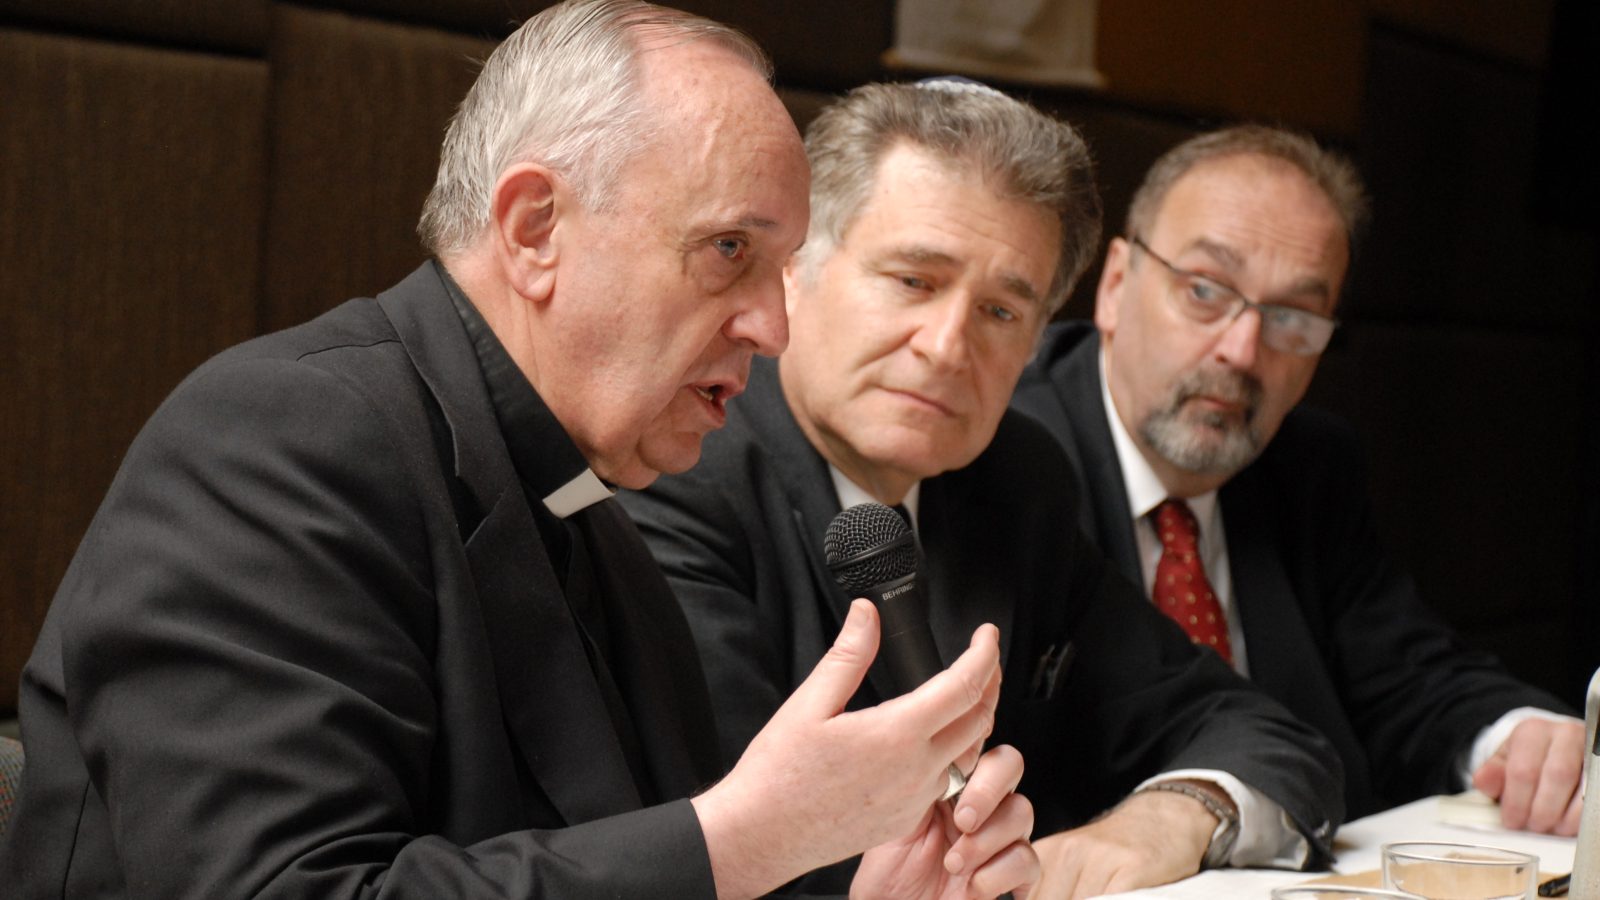 Pope Francis and Rabbi Abraham Skorka speak on a panel together.